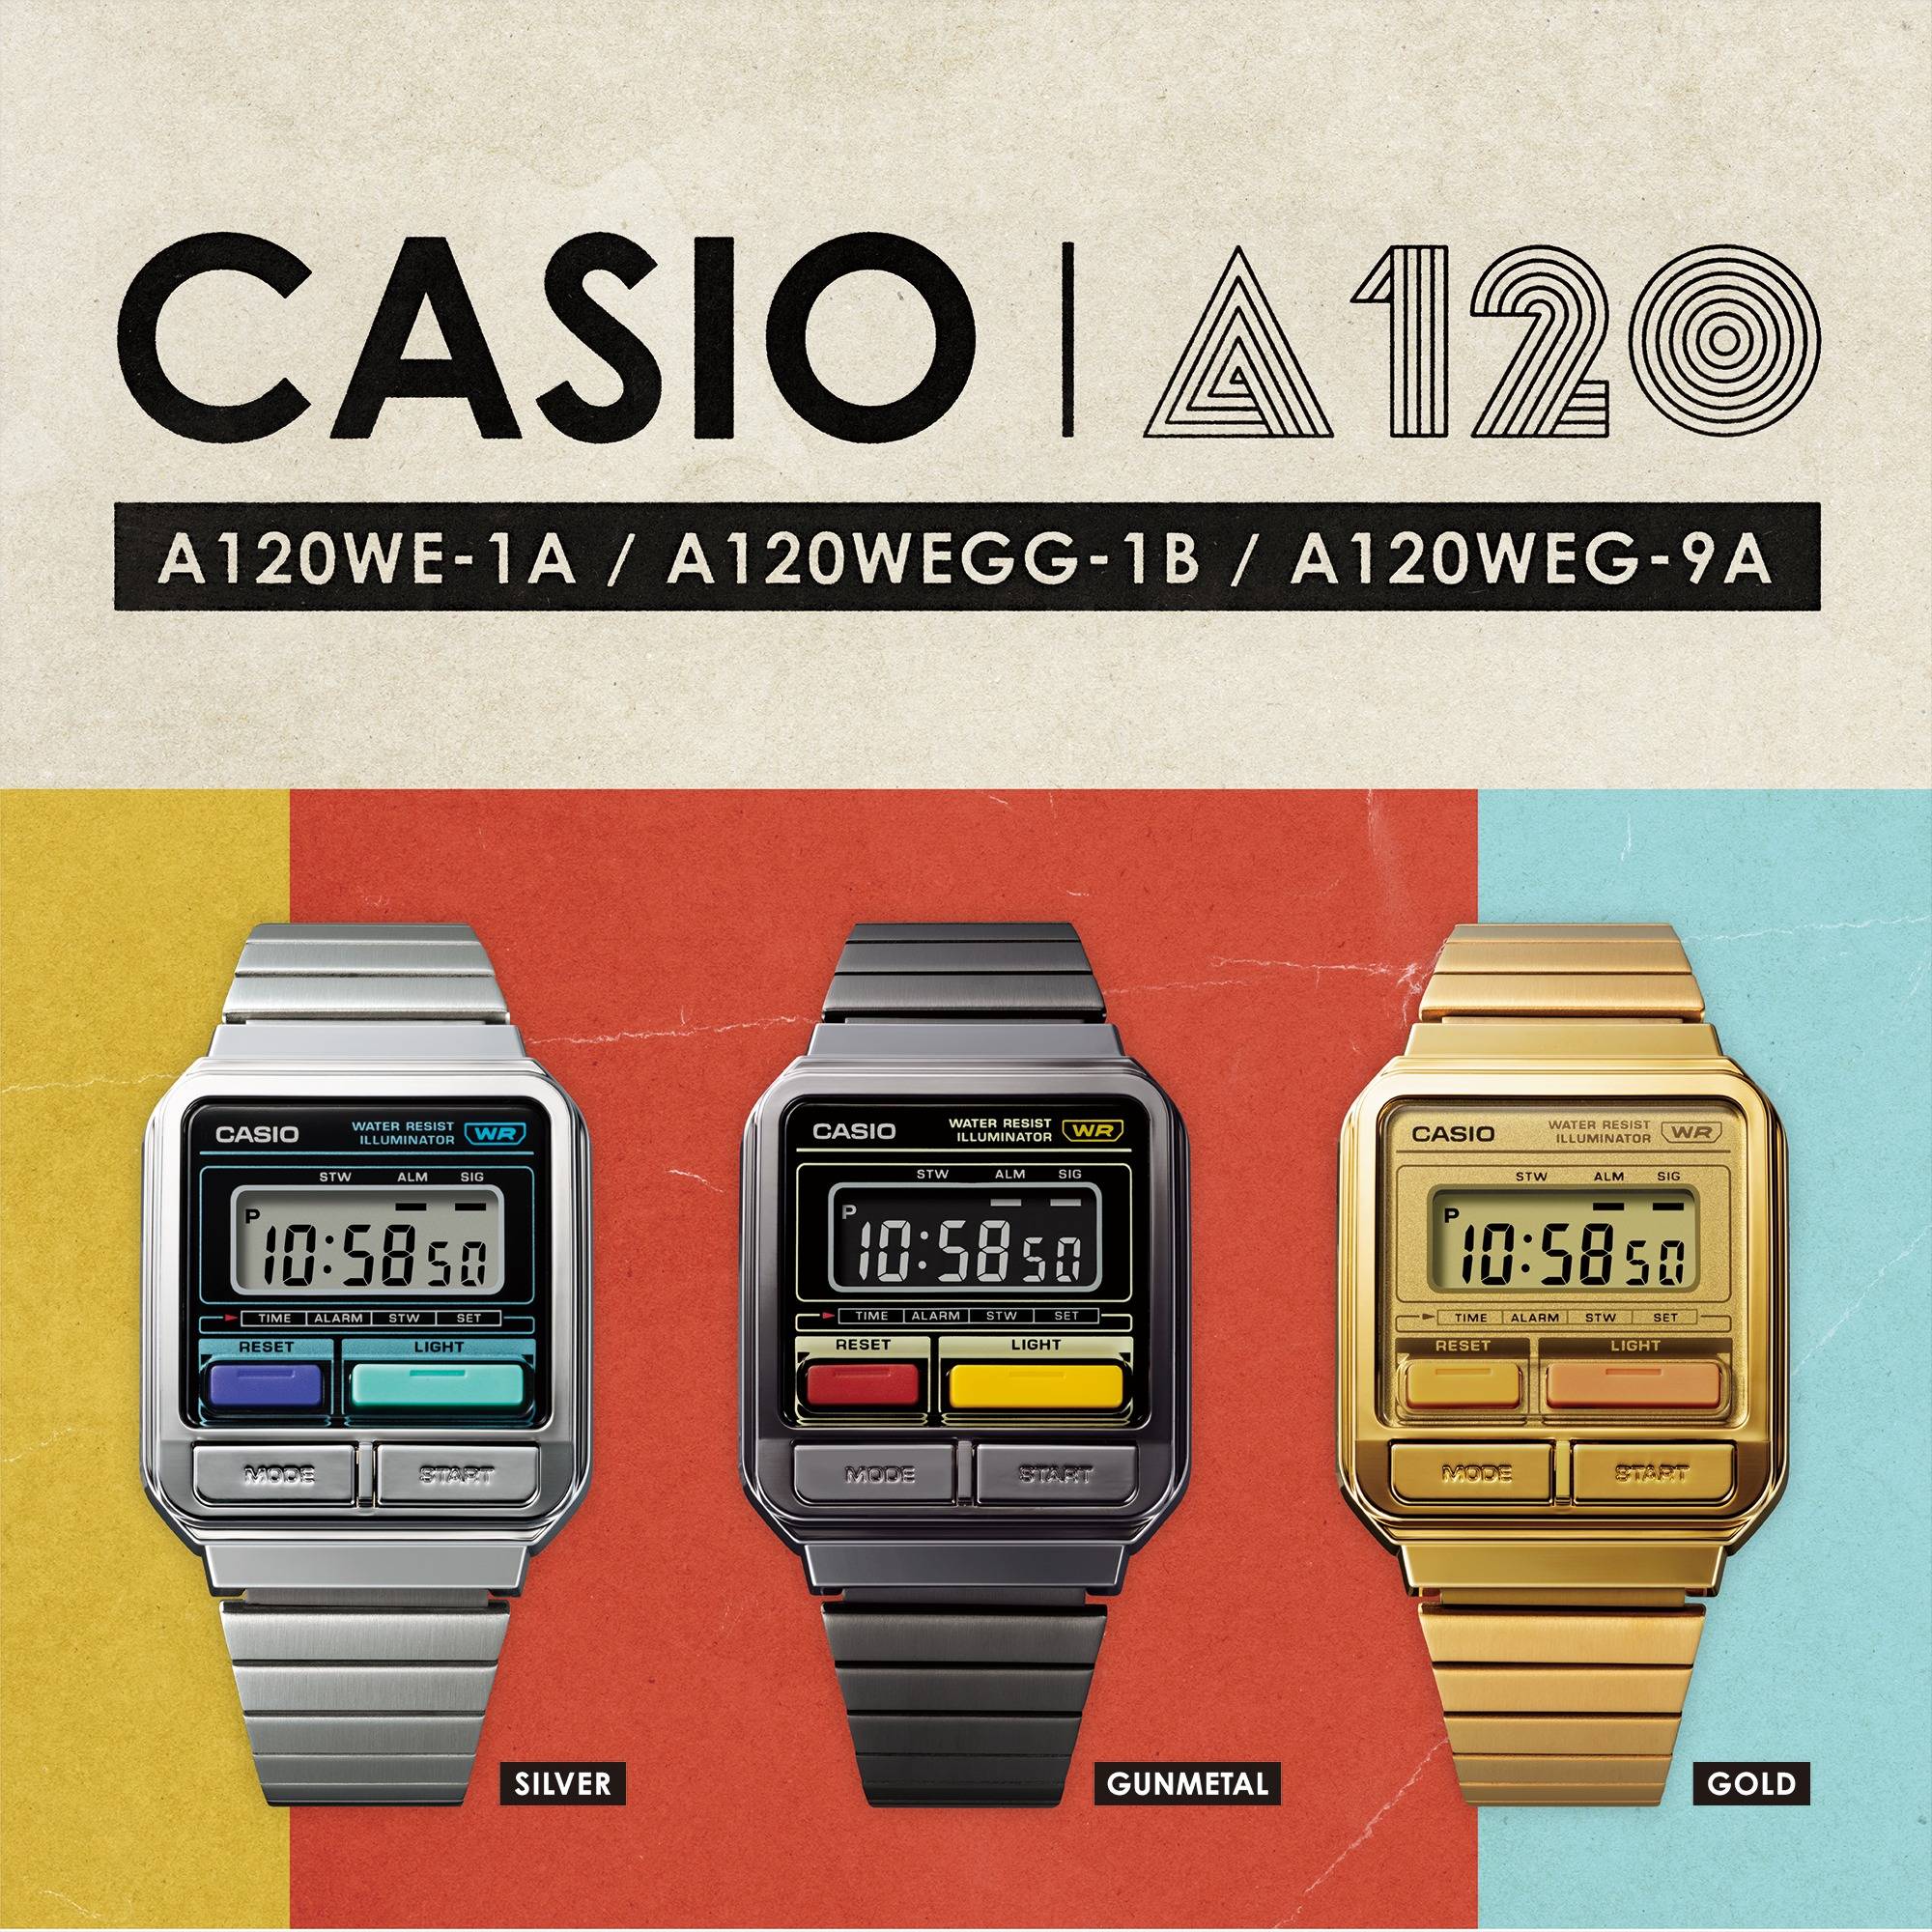 Casio A120WEGG-1B